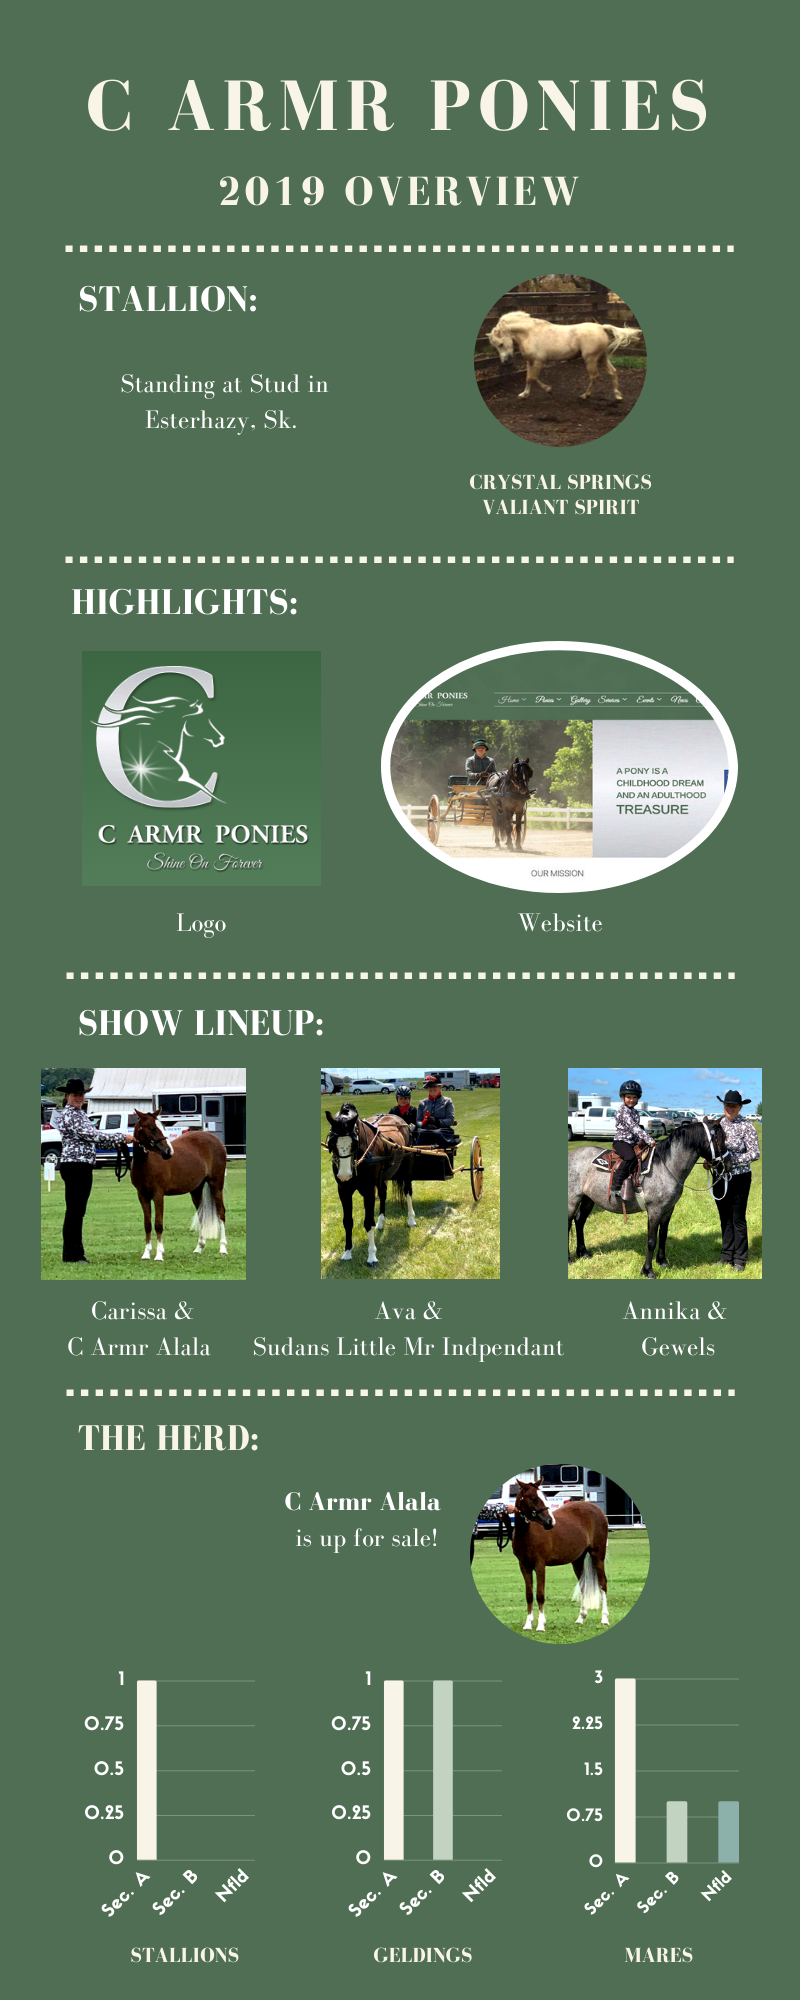 C Armr Ponies Overview 2019